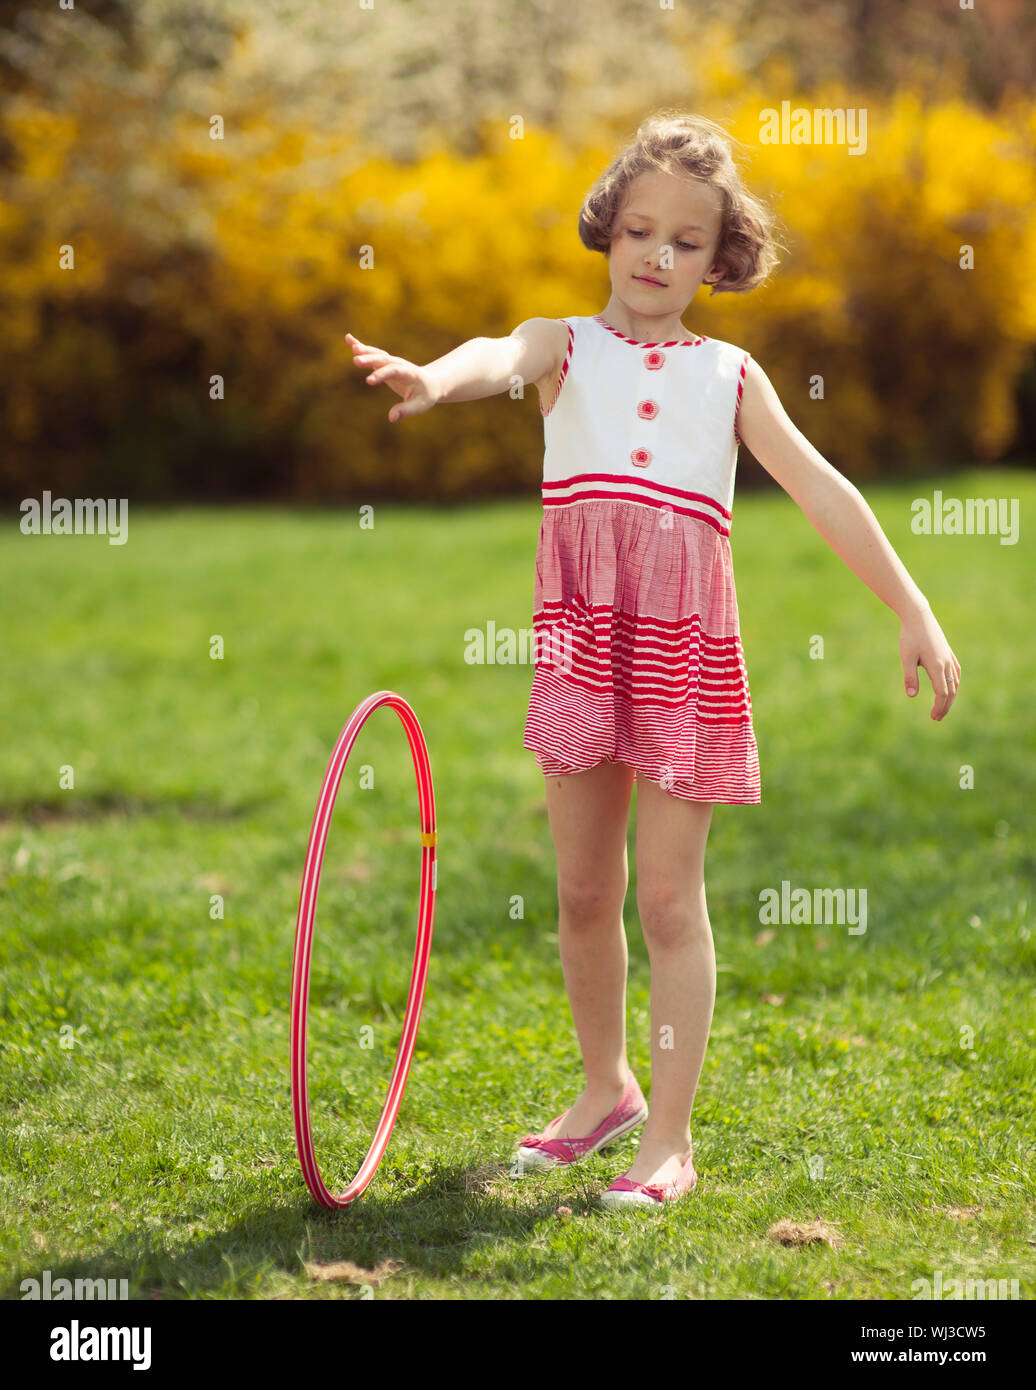 Junges Mädchen Rollen Hula Hoop Reifen im park Stockfotografie - Alamy